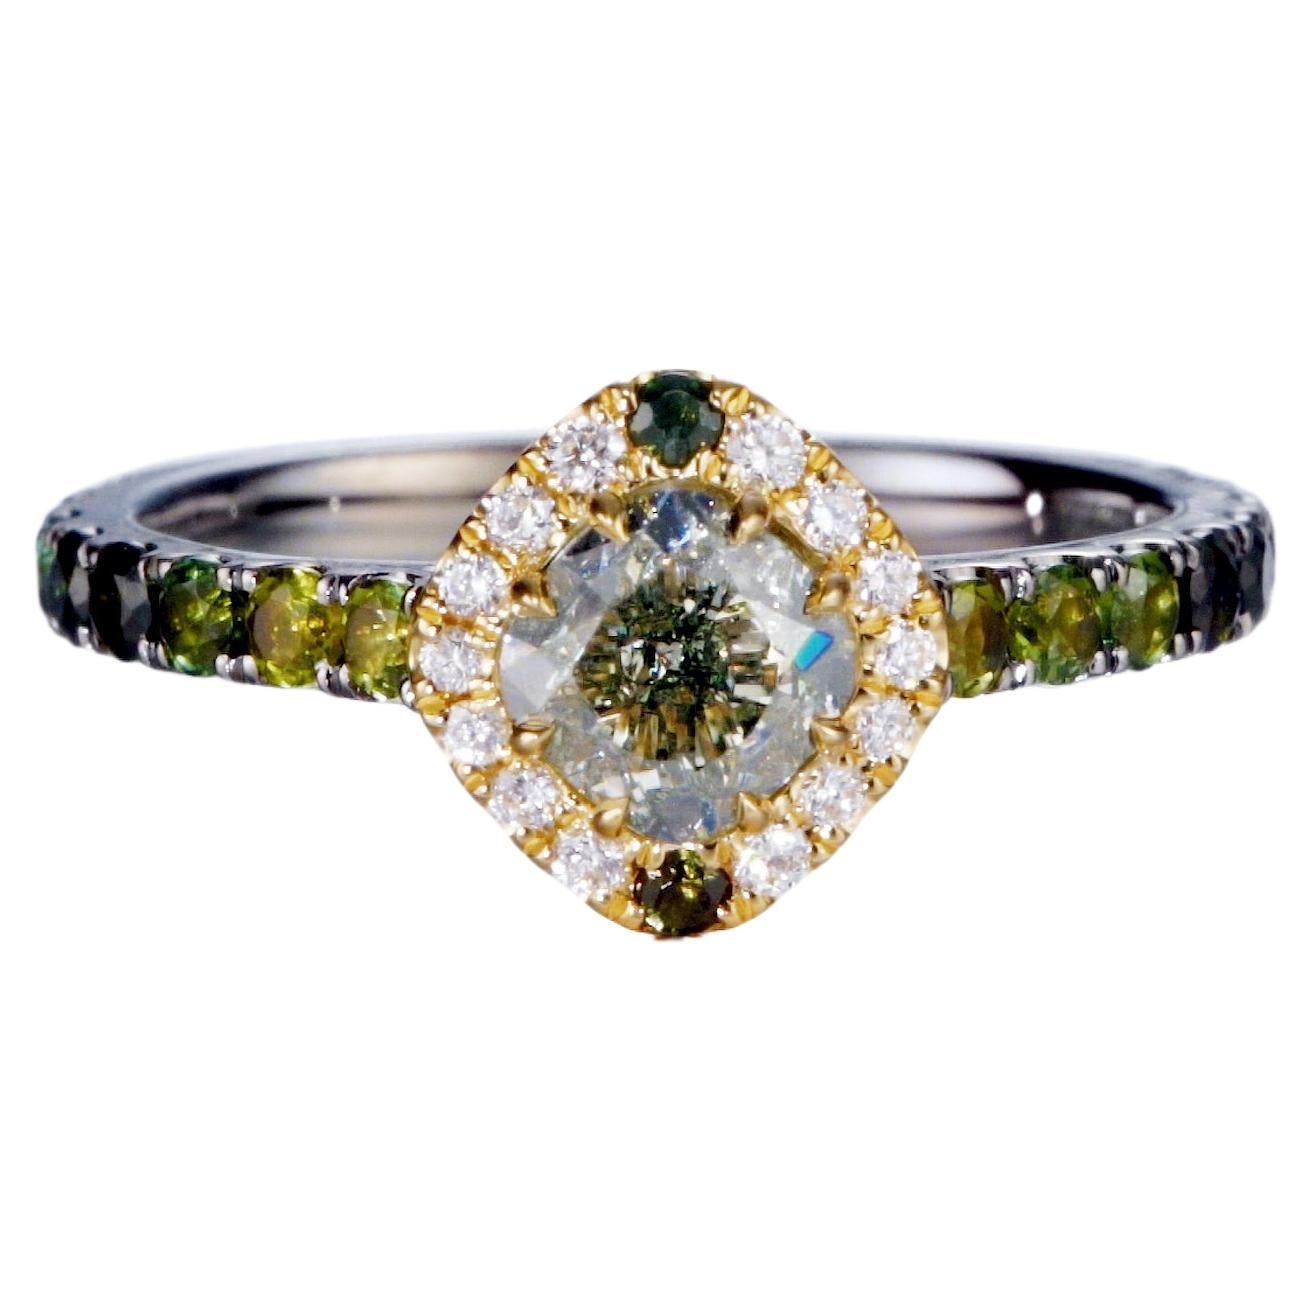 GIA Certified, 1.01ct Natural Fancy Gray-Green Cushion shape Diamond Ring 18KT